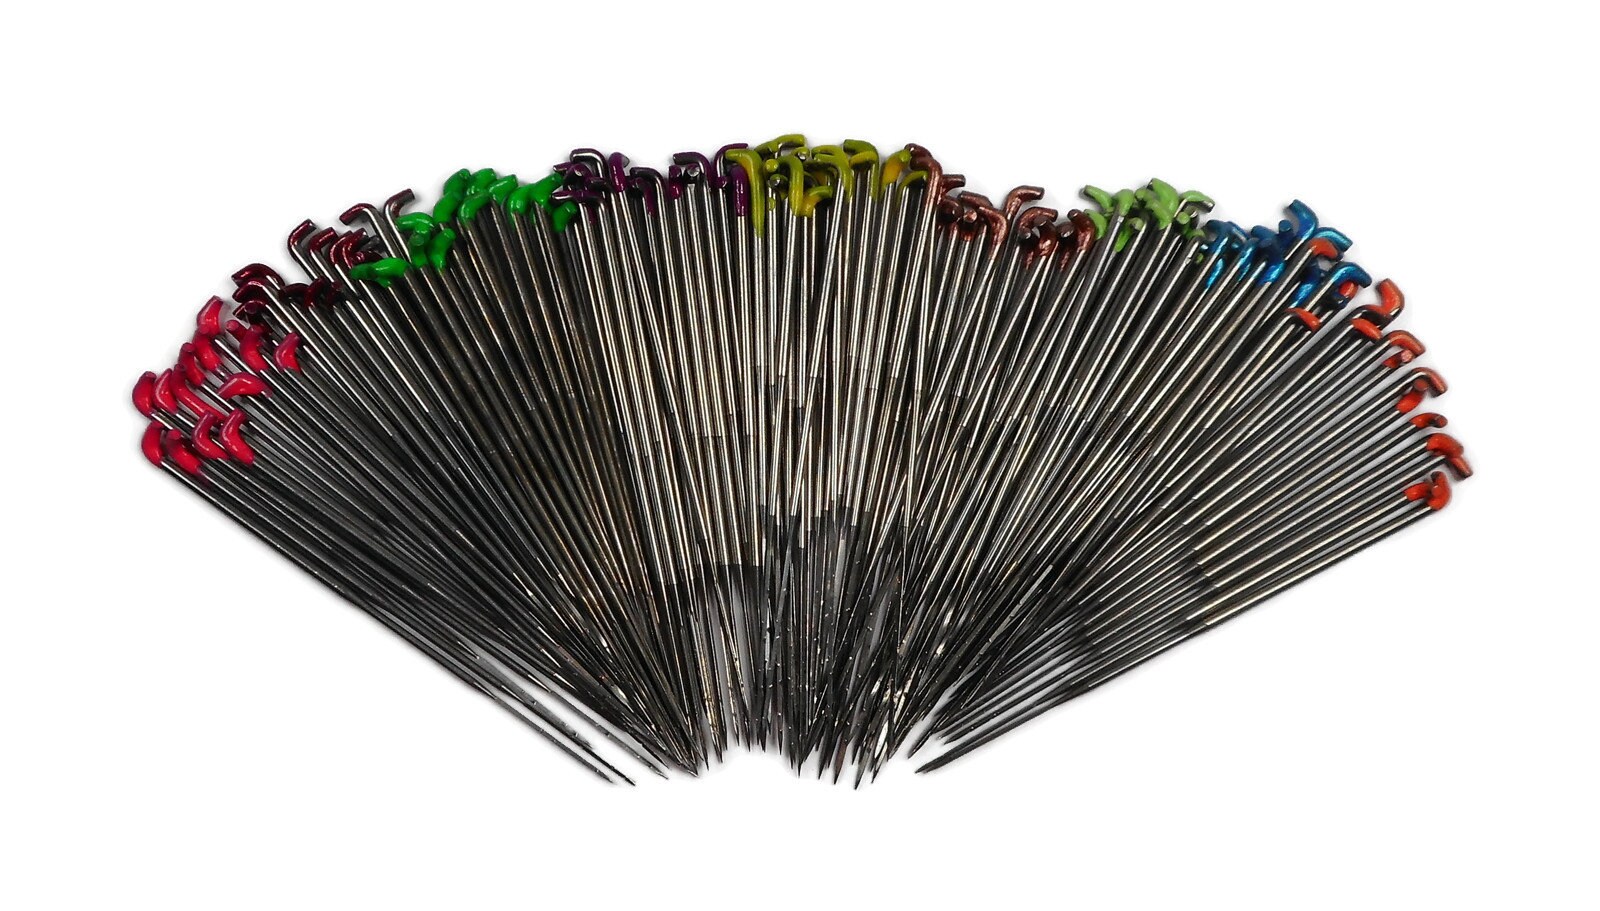 Needle Felting Needles, Color Coded Pack of 6, Regular Triangular Needles,  36T, Felting Supply, Craft Supplies, DIY, Fiber Arts 